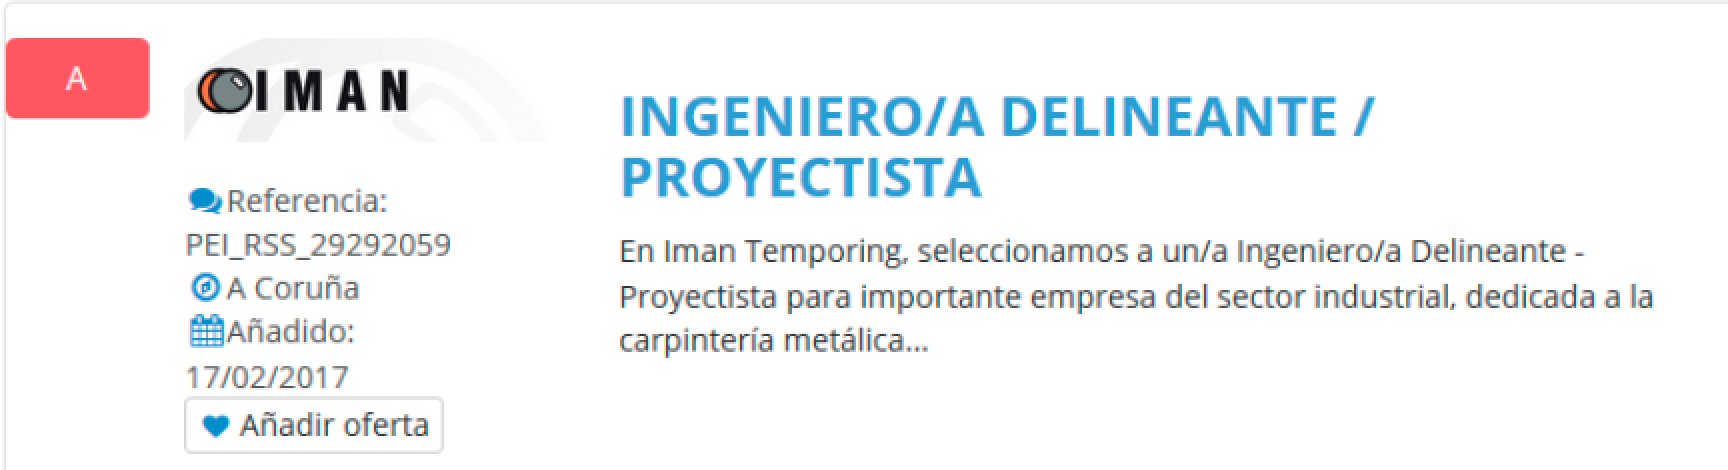 #OfertaEmpleo @proempleoing   Ingeniero Deliniante Proyectista #ACoruña https://t.co/4RCRb3PLIA https://t.co/WrVA0Ci3p4